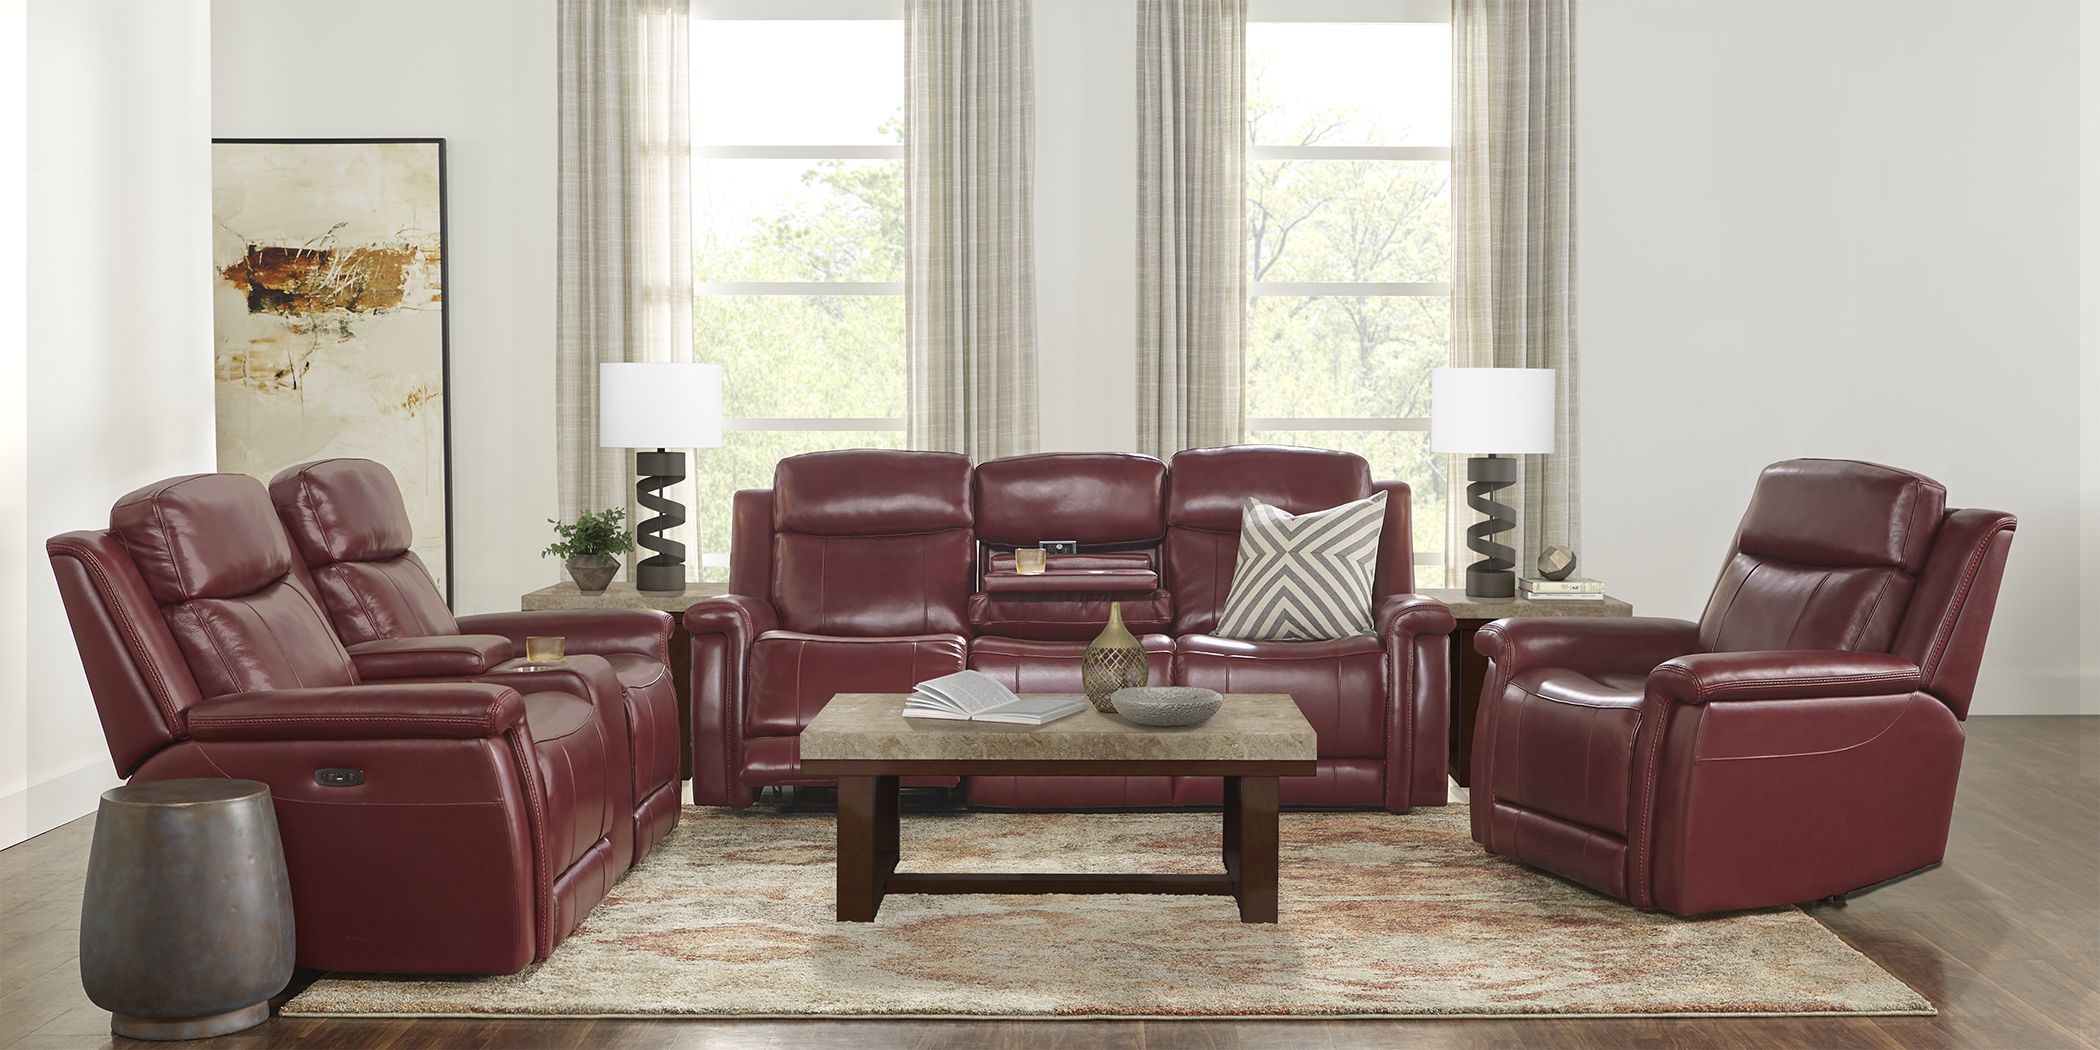 orsini living room furniture